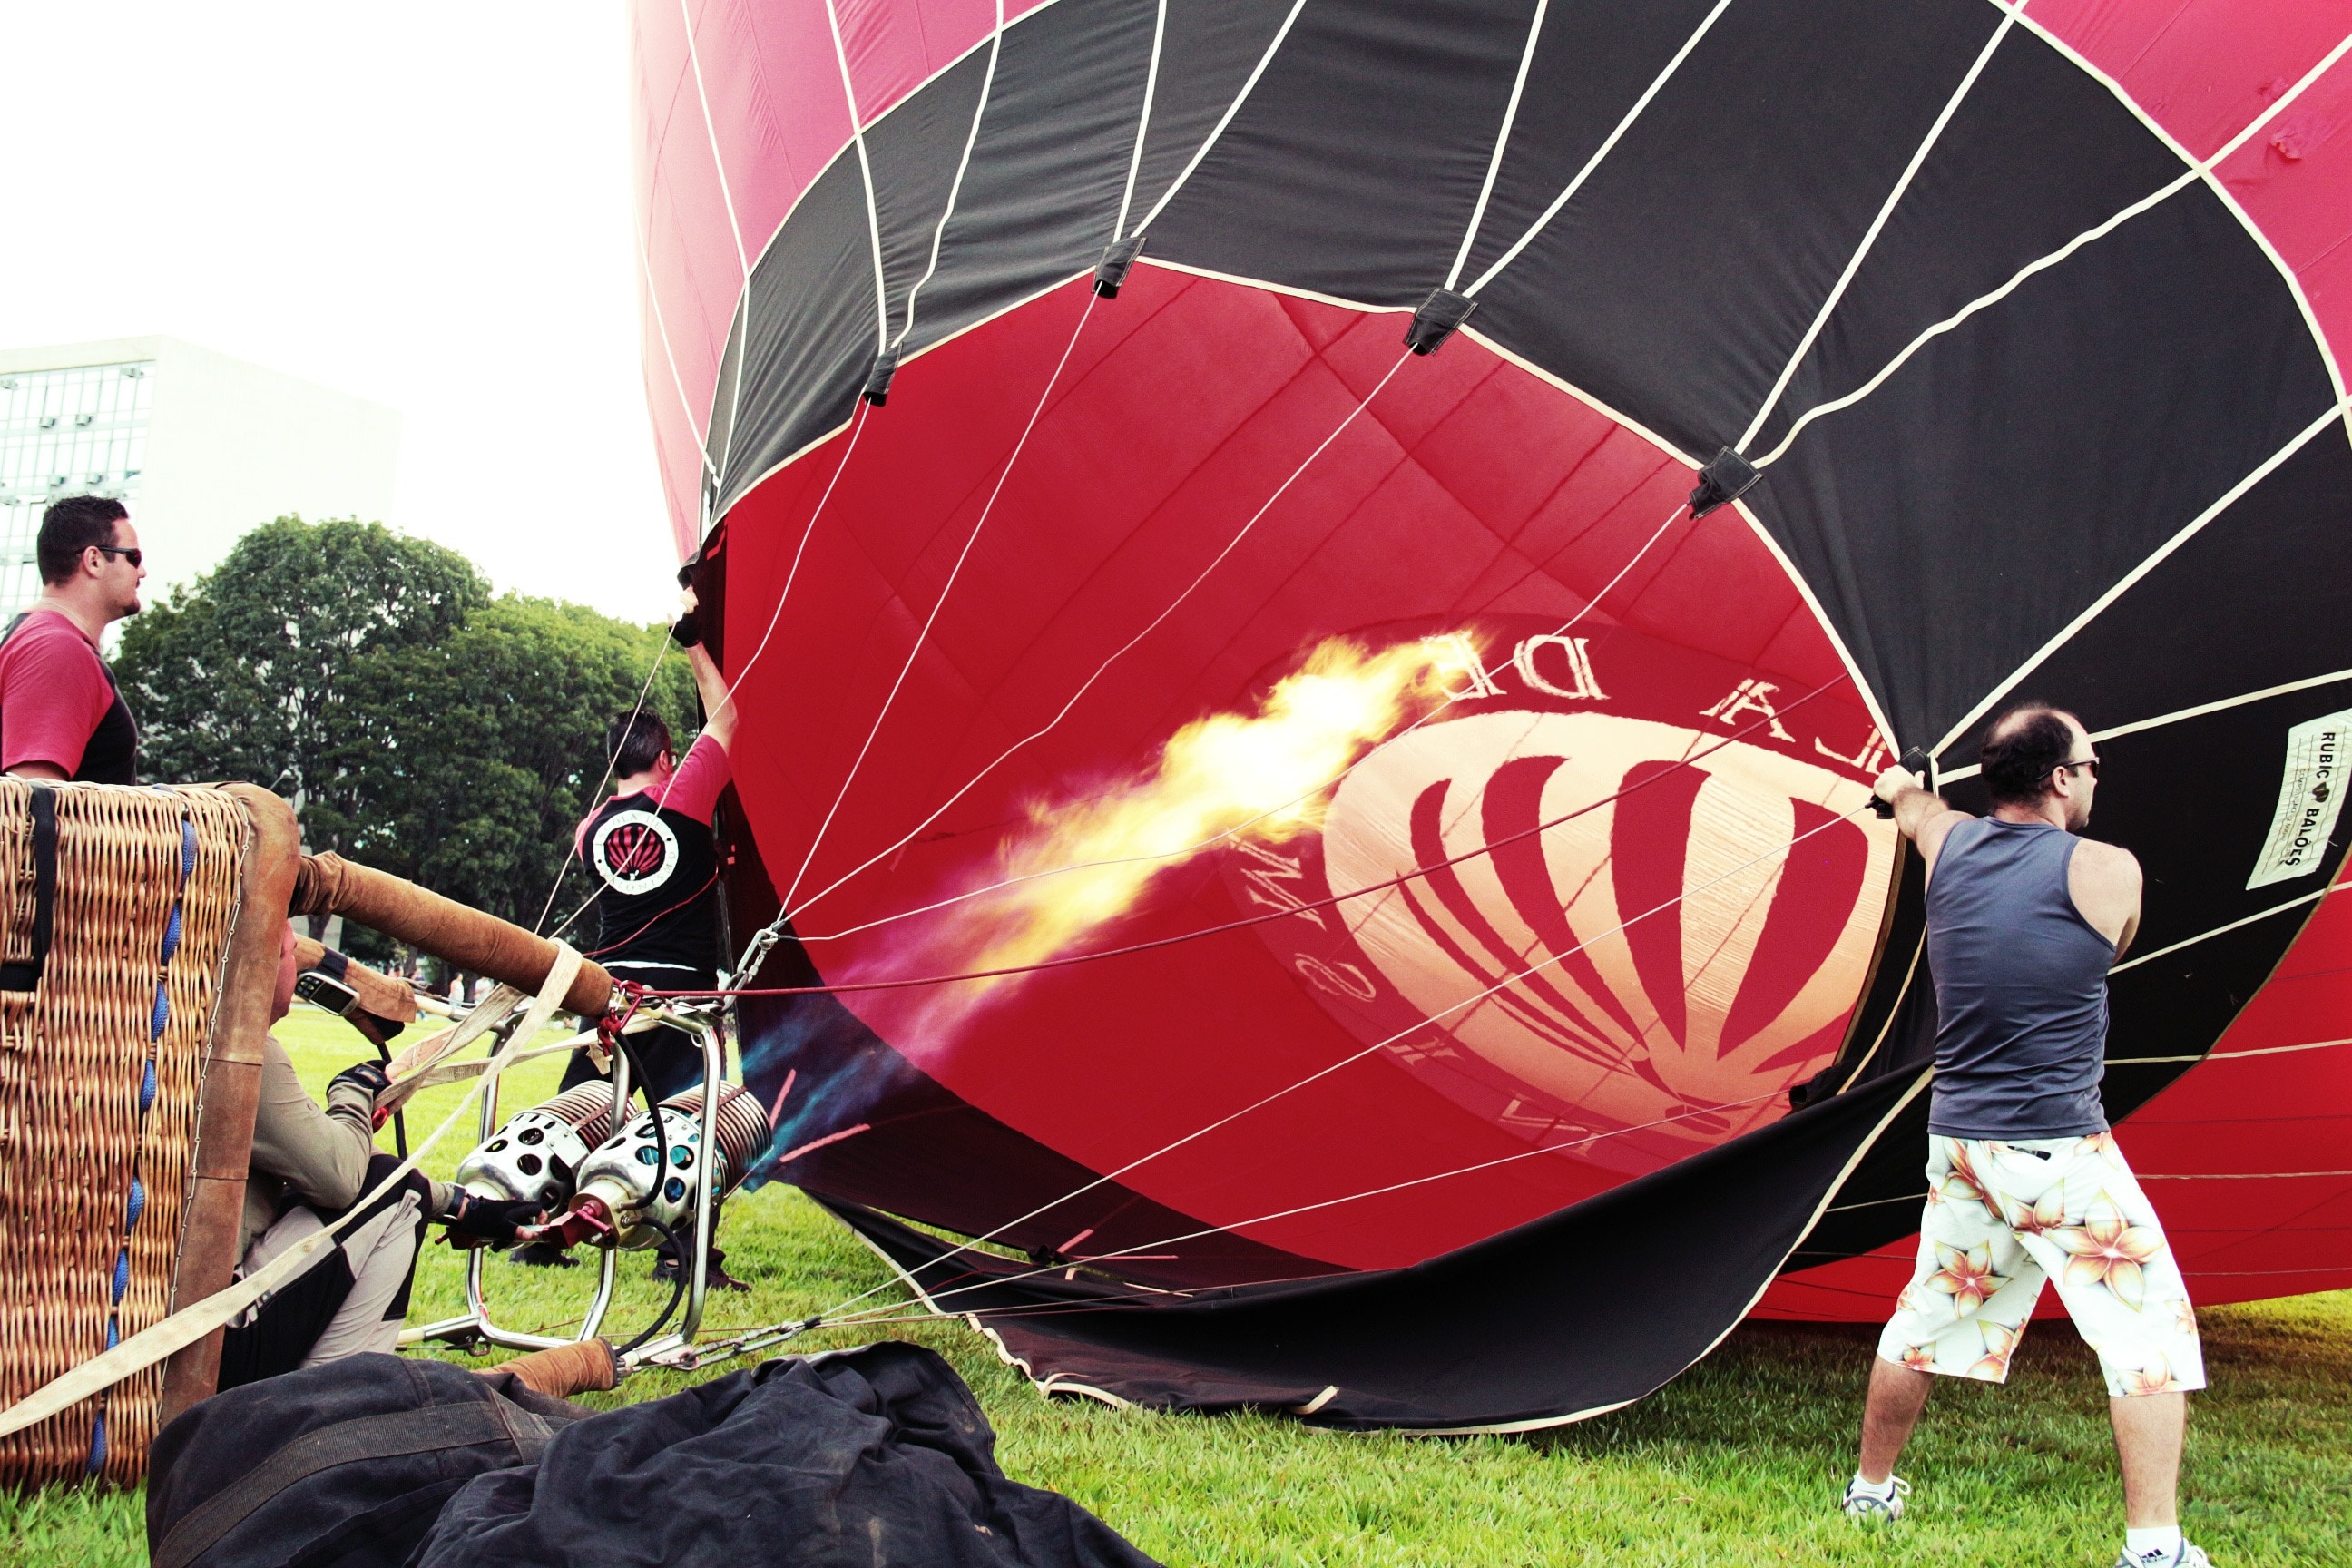 Flight, Sky, Hot Air Ballooning, Light, inflating, outdoors